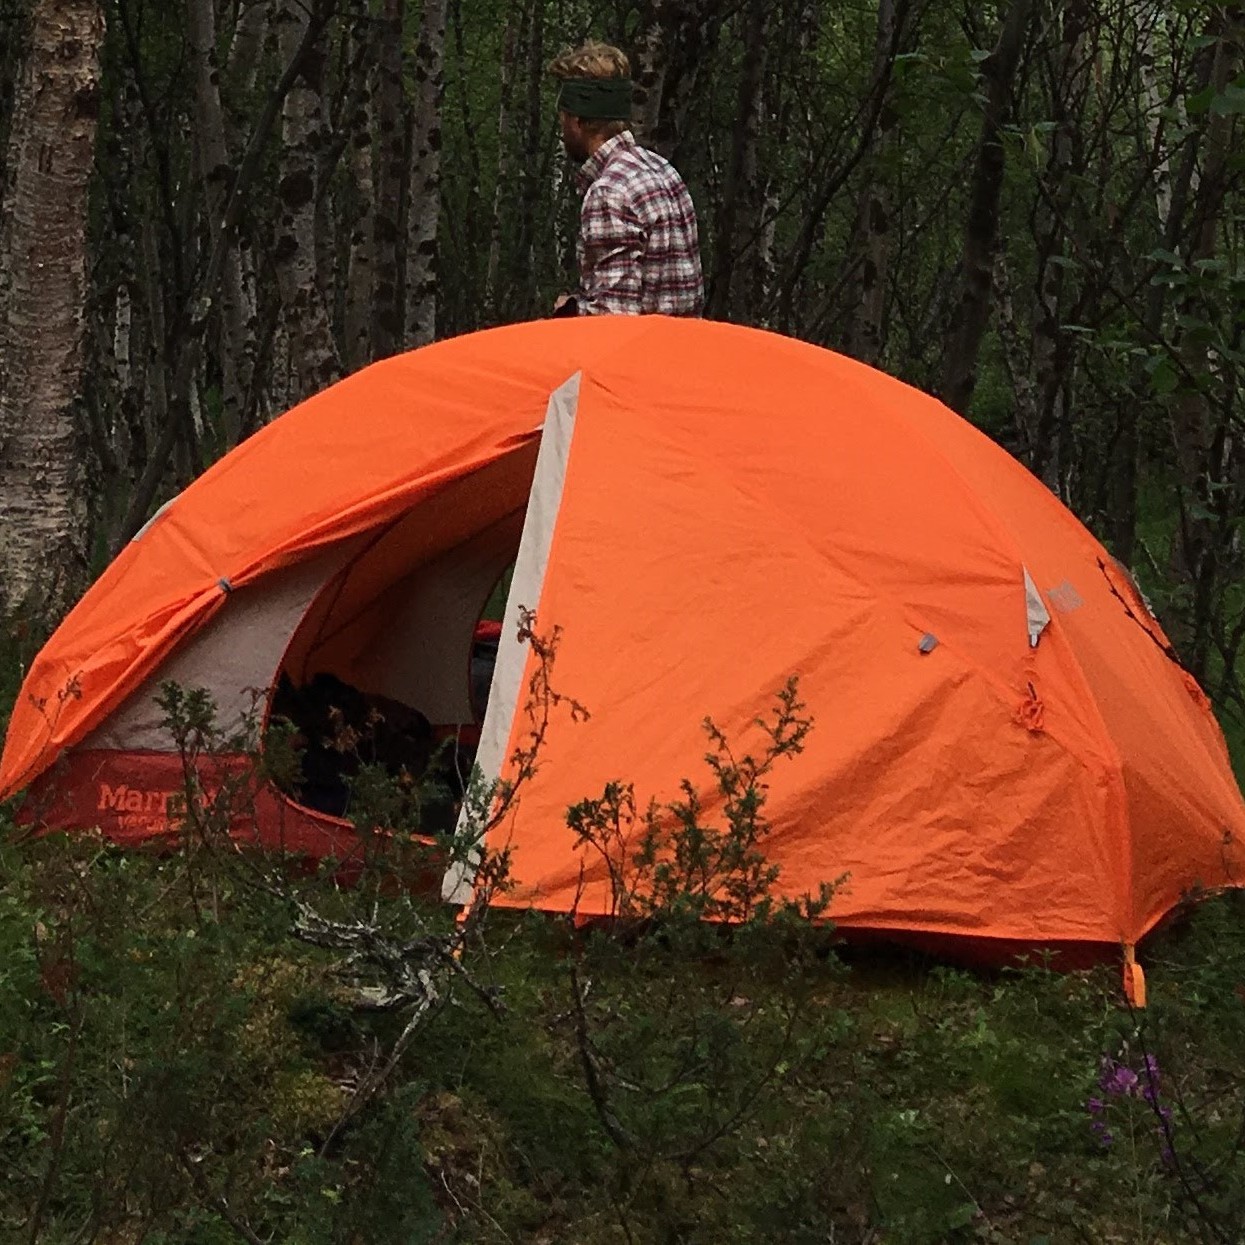 Marmot Vapor 2P Lightweight Hiking Tent